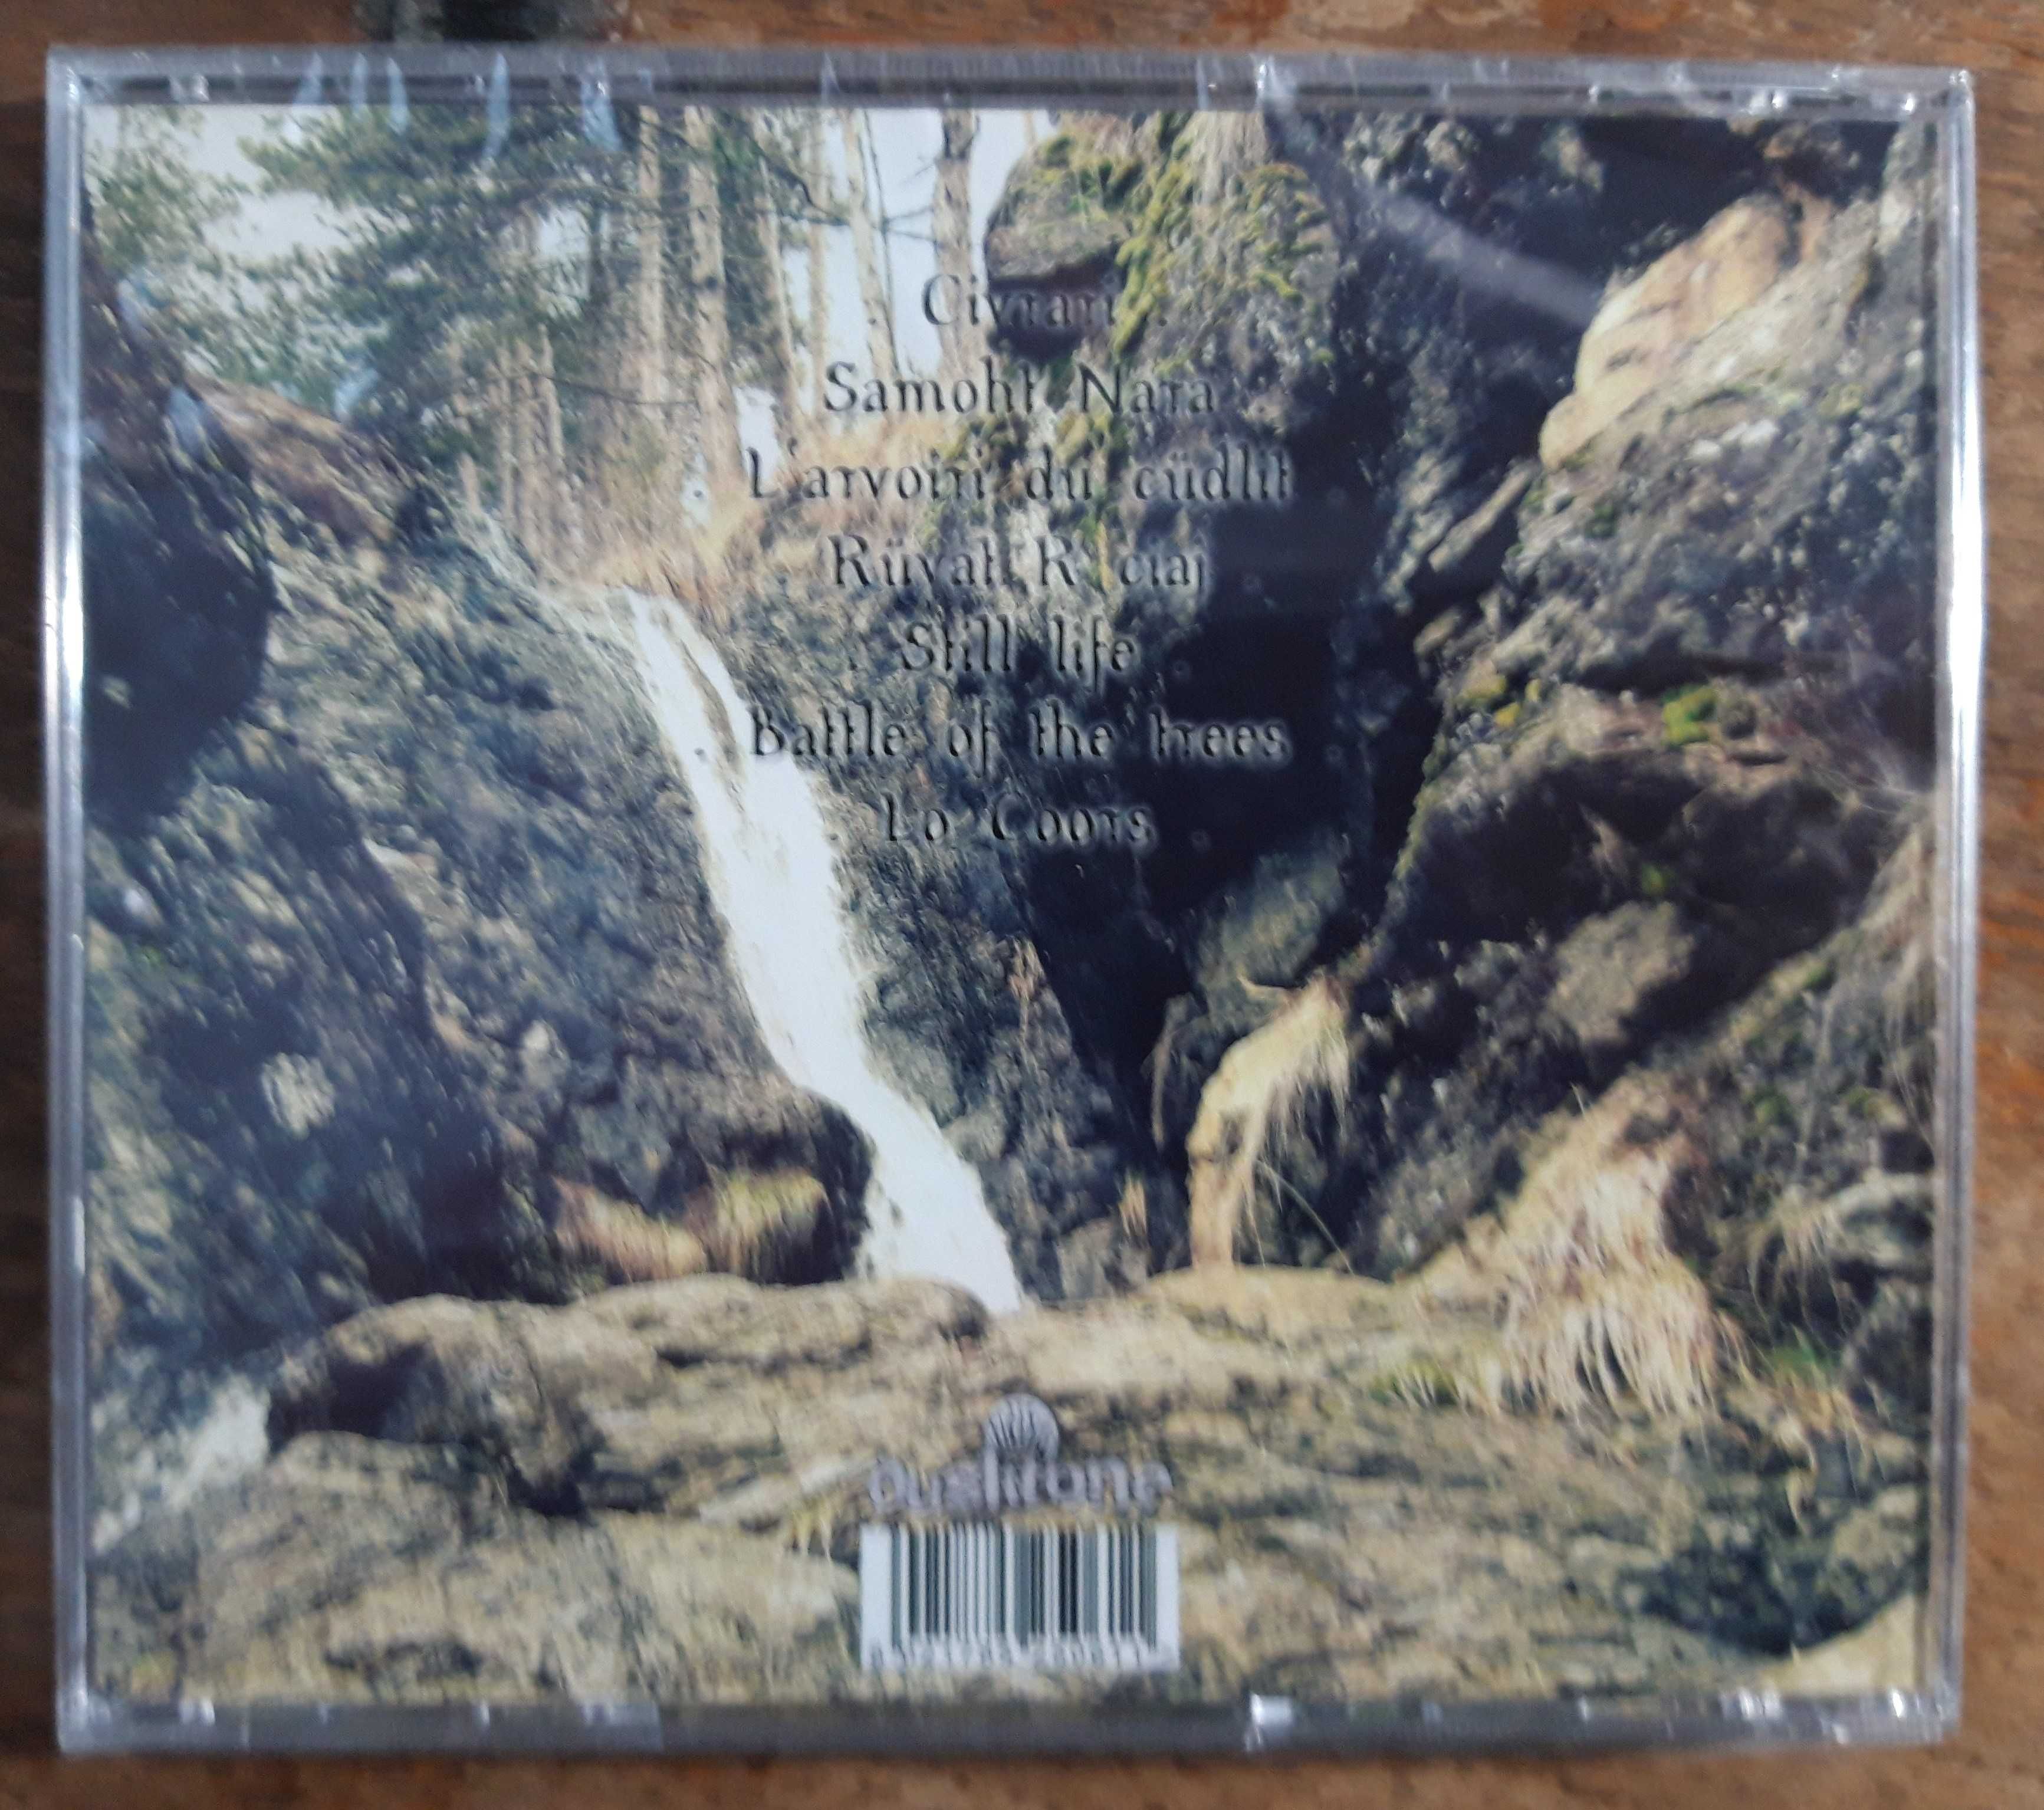 CD Enisum - Samoht Nara, atmospheric black metal